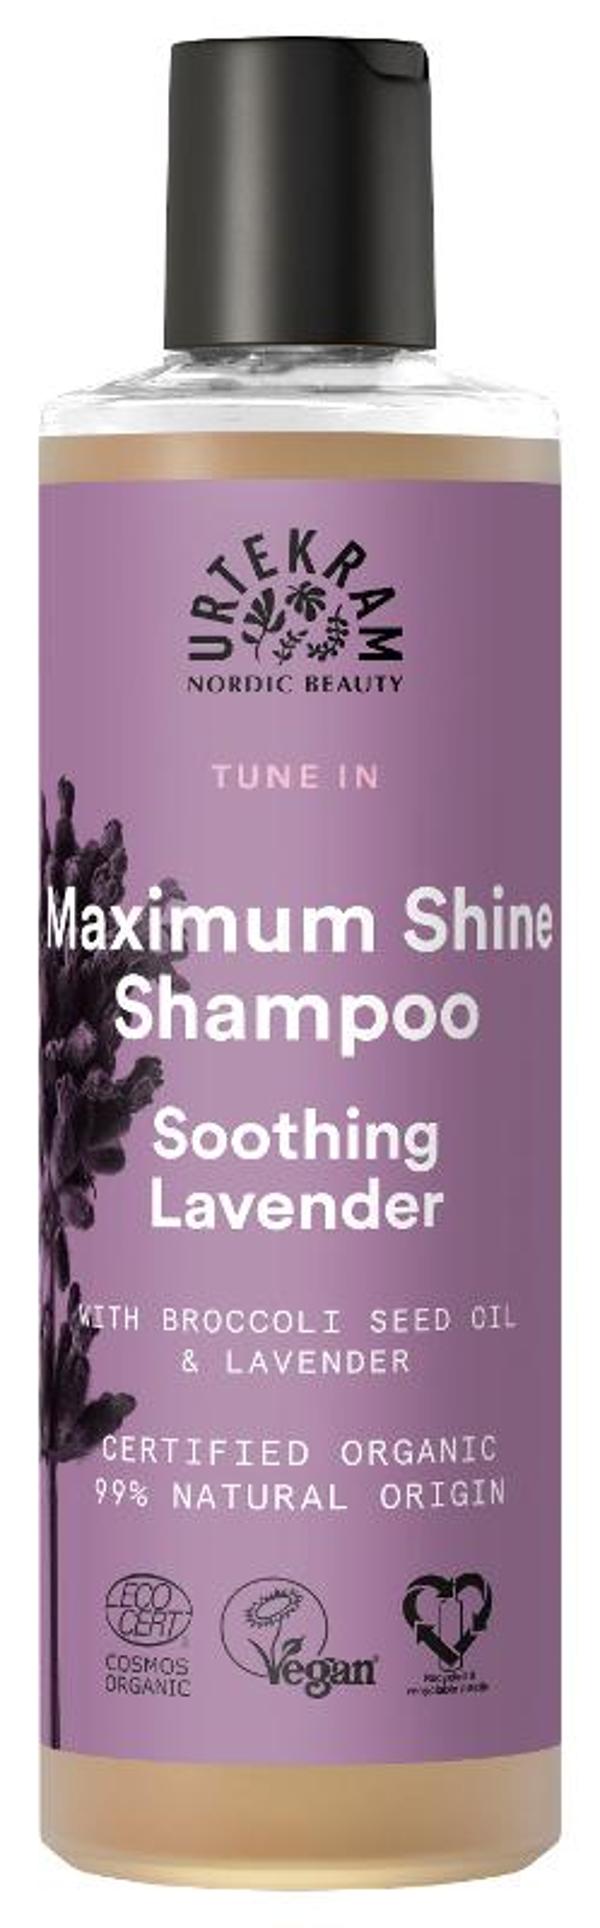 Produktfoto zu Shampoo Soothing Lavender